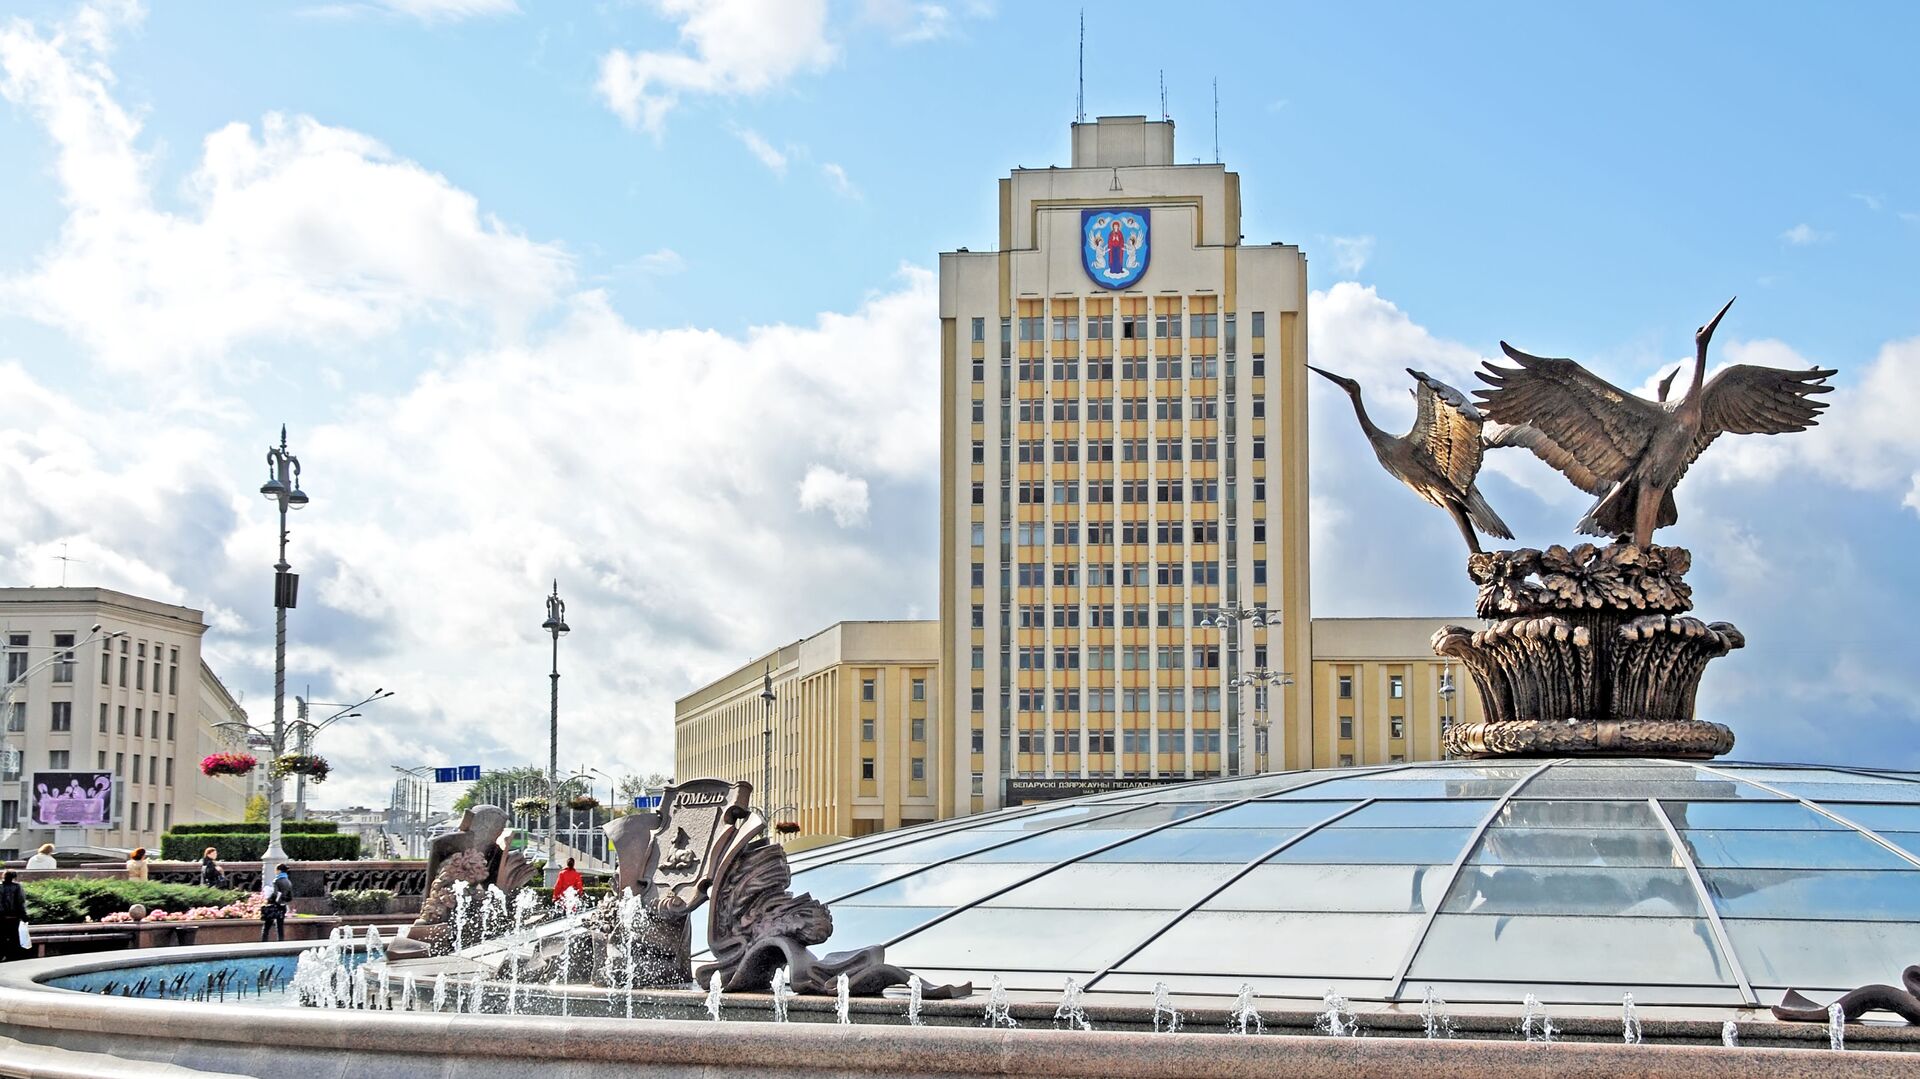 Площадь Независимости в Минске, Белоруссия - Sputnik Србија, 1920, 22.06.2021